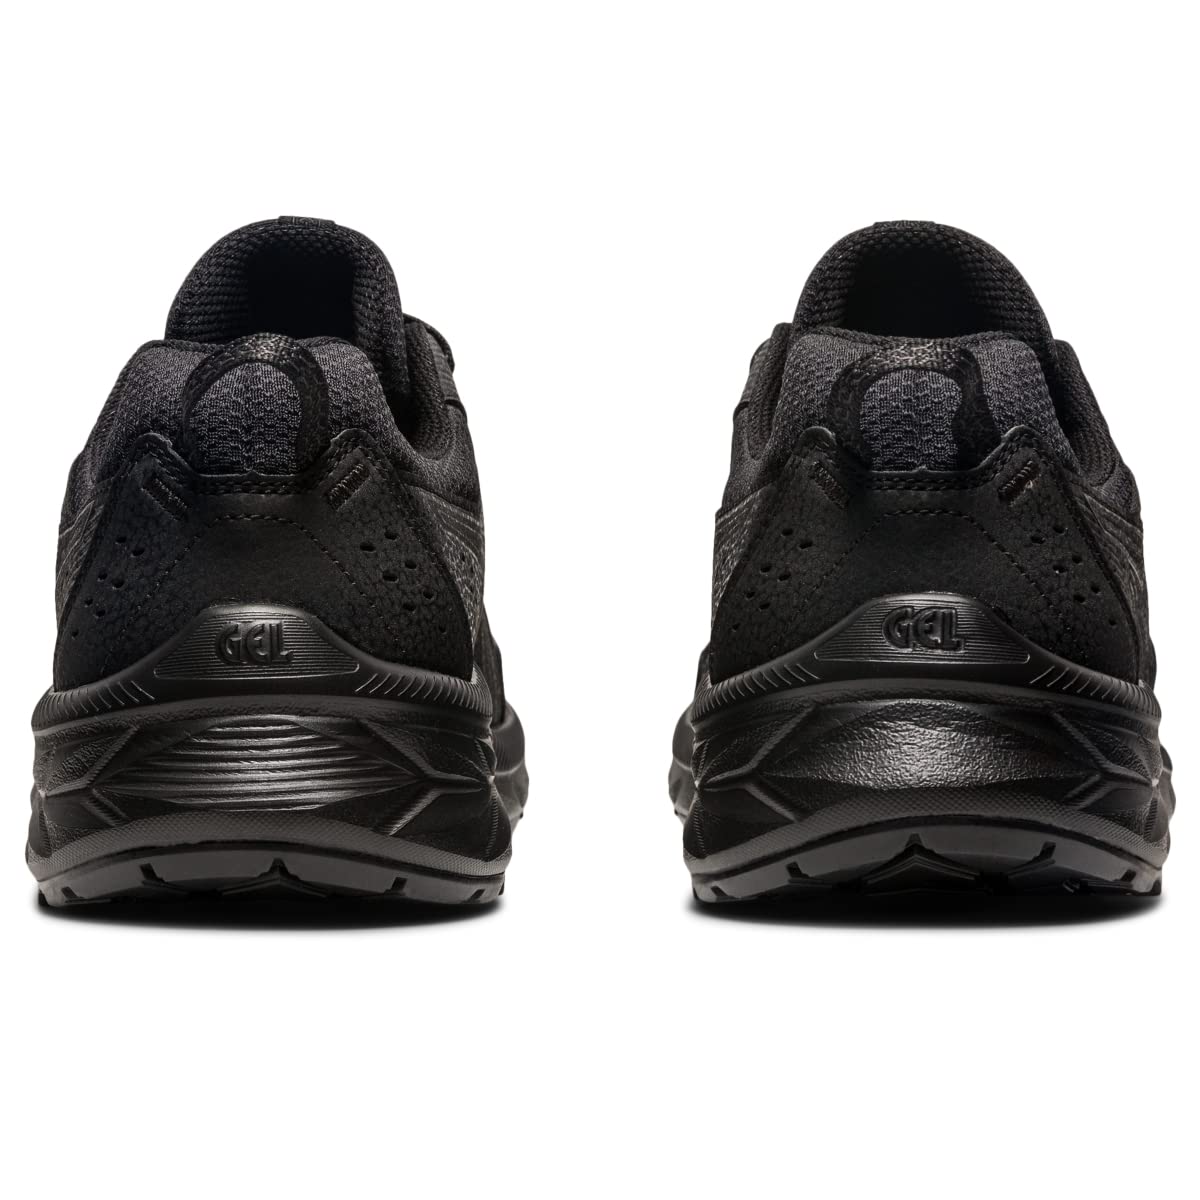 ASICS Men's GEL-VENTURE 9 Running Shoes, 10.5, BLACK/BLACK